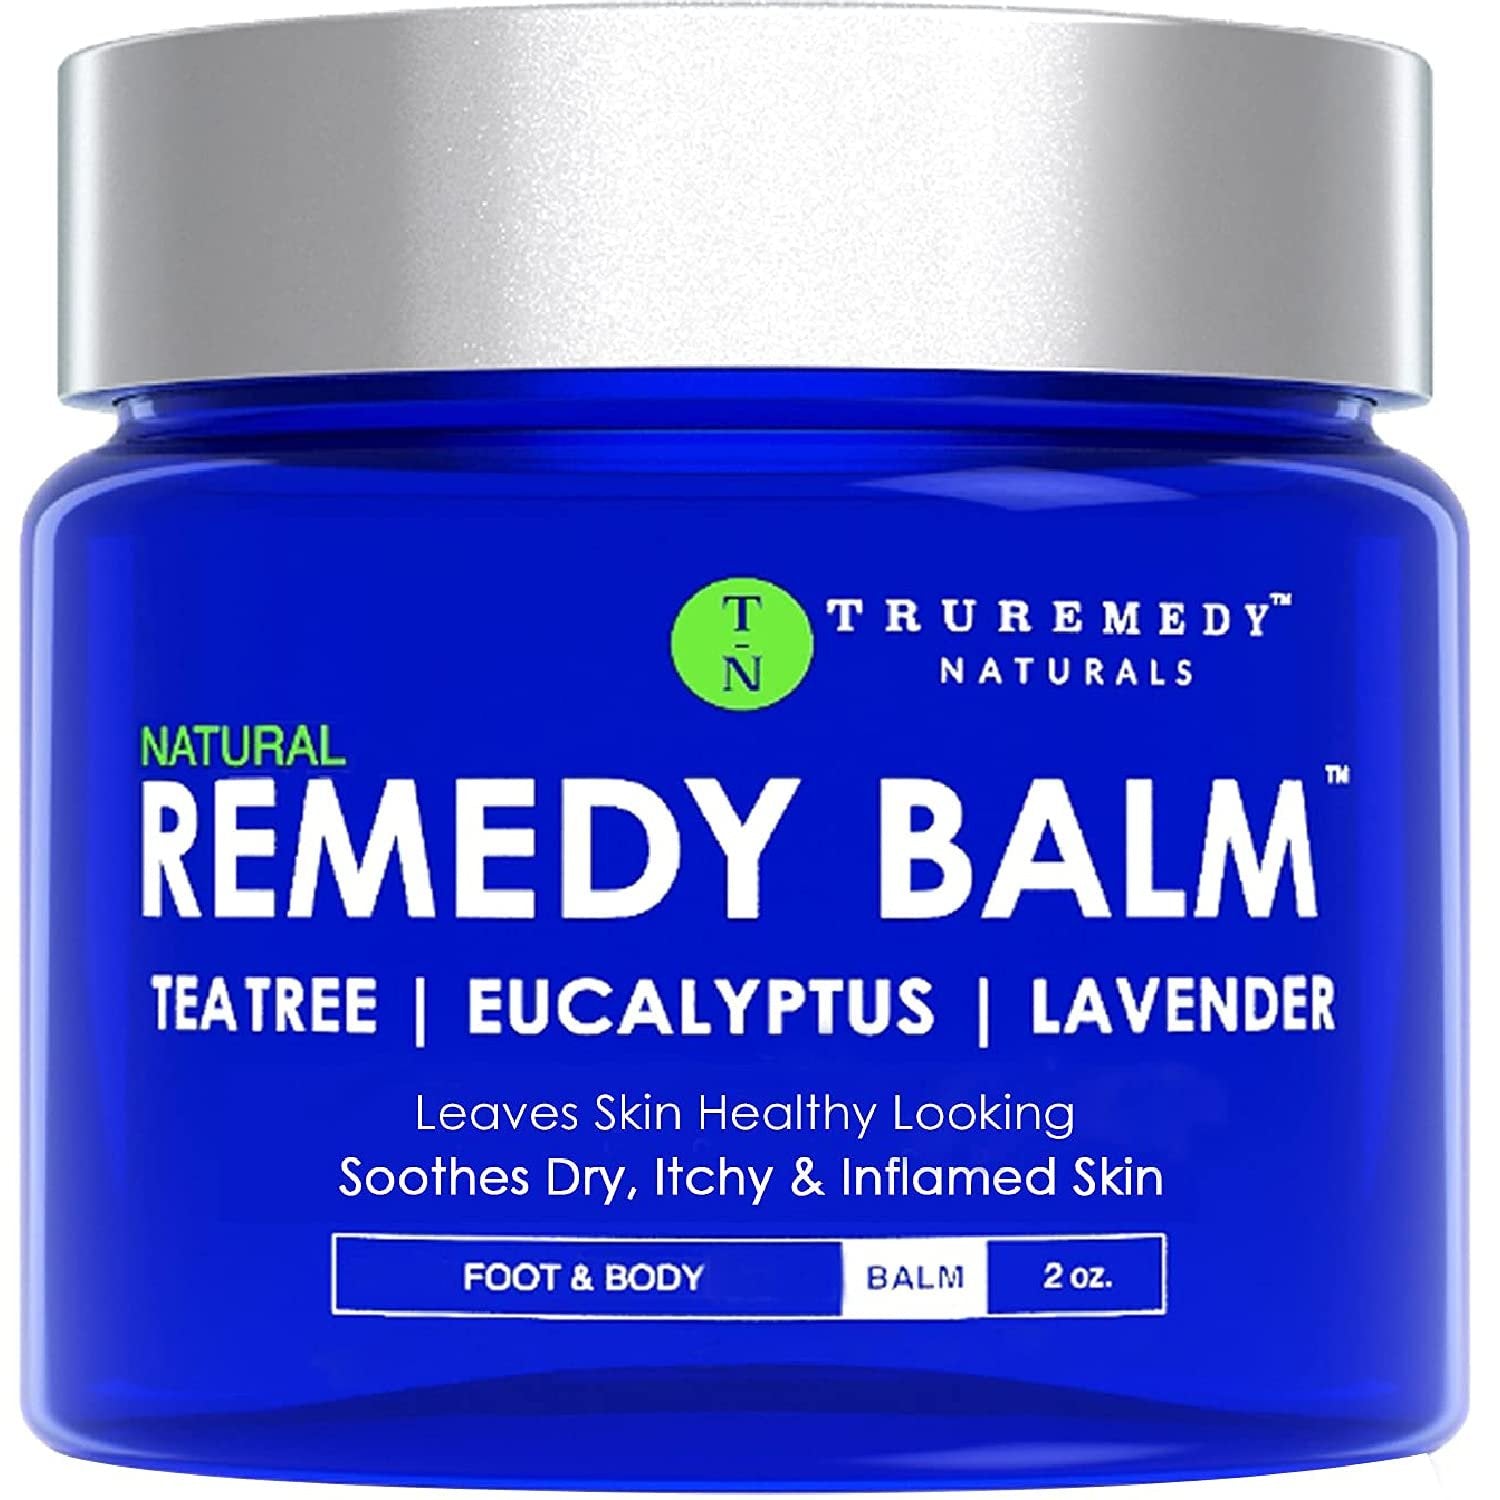 Truremedy Naturals Tea Tree Oil Balm 2oz - Athlete's Foot, Jock Itch, Eczema, Skin Irritation Relief - Lavender & Eucalyptus - Blue